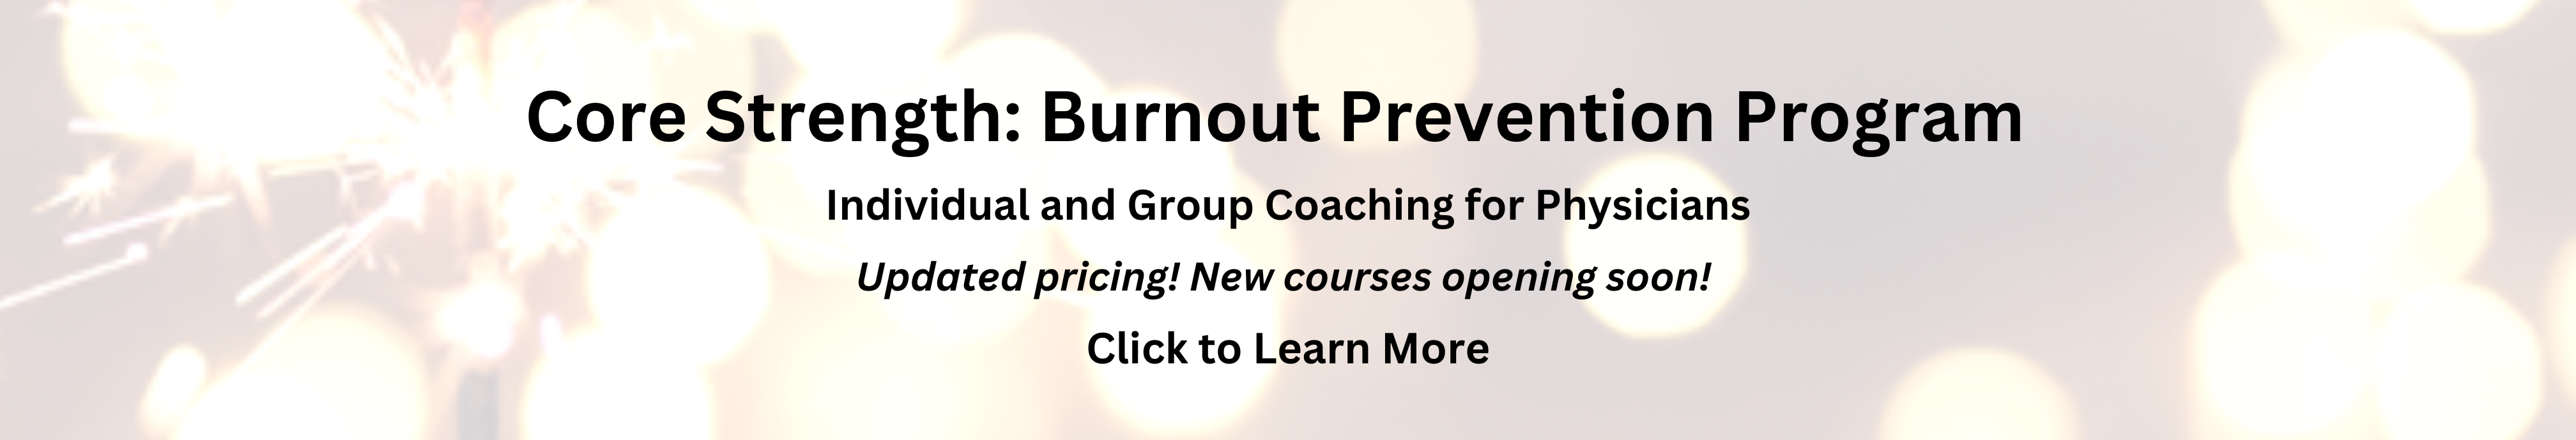 Core Strength Burnout Prevention Program